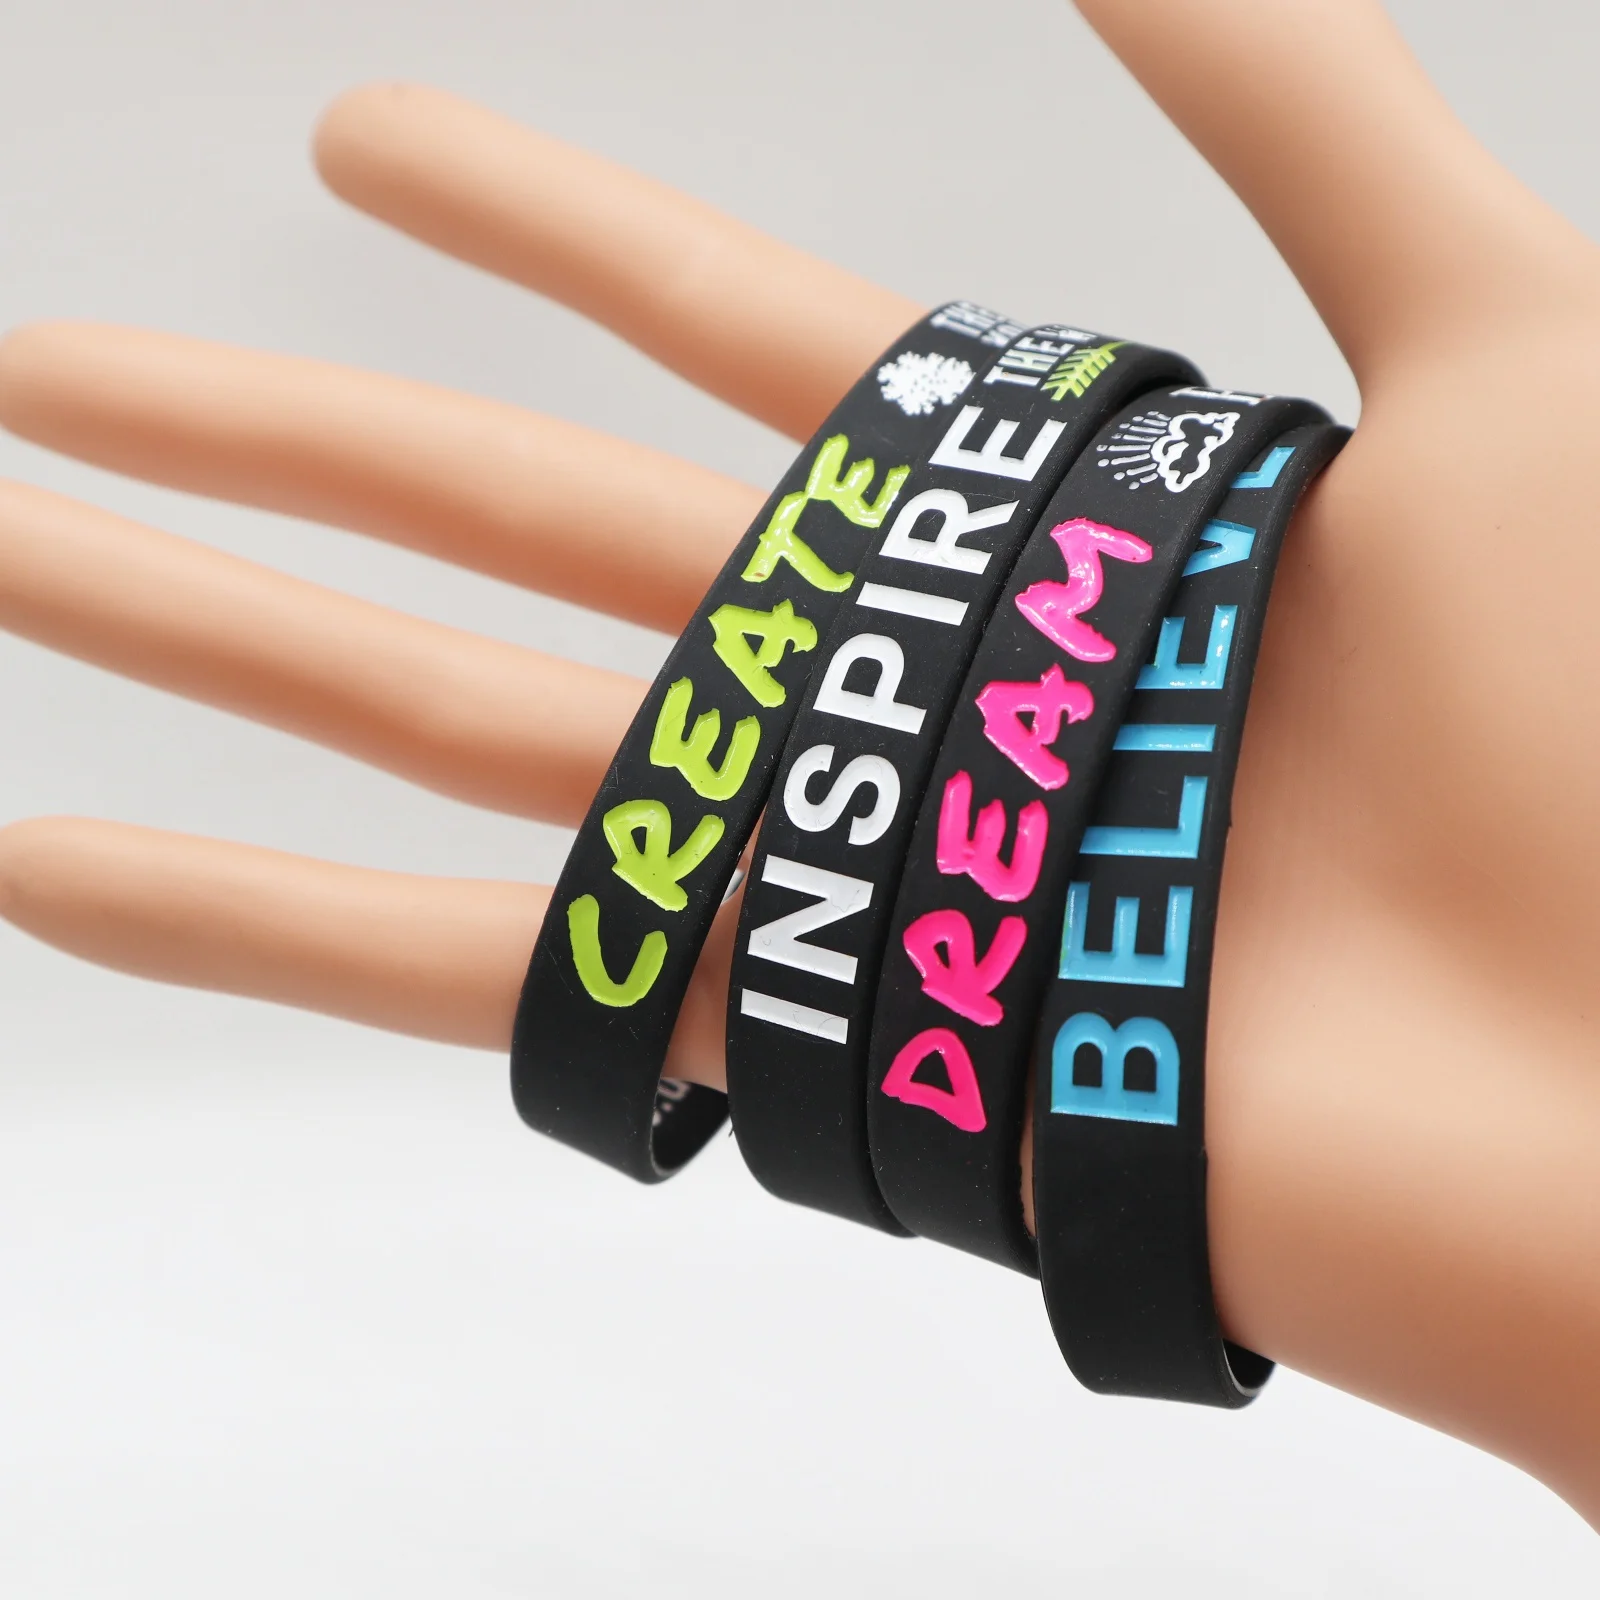 Livestrong bracelets began healthy trend  News  gazettecom